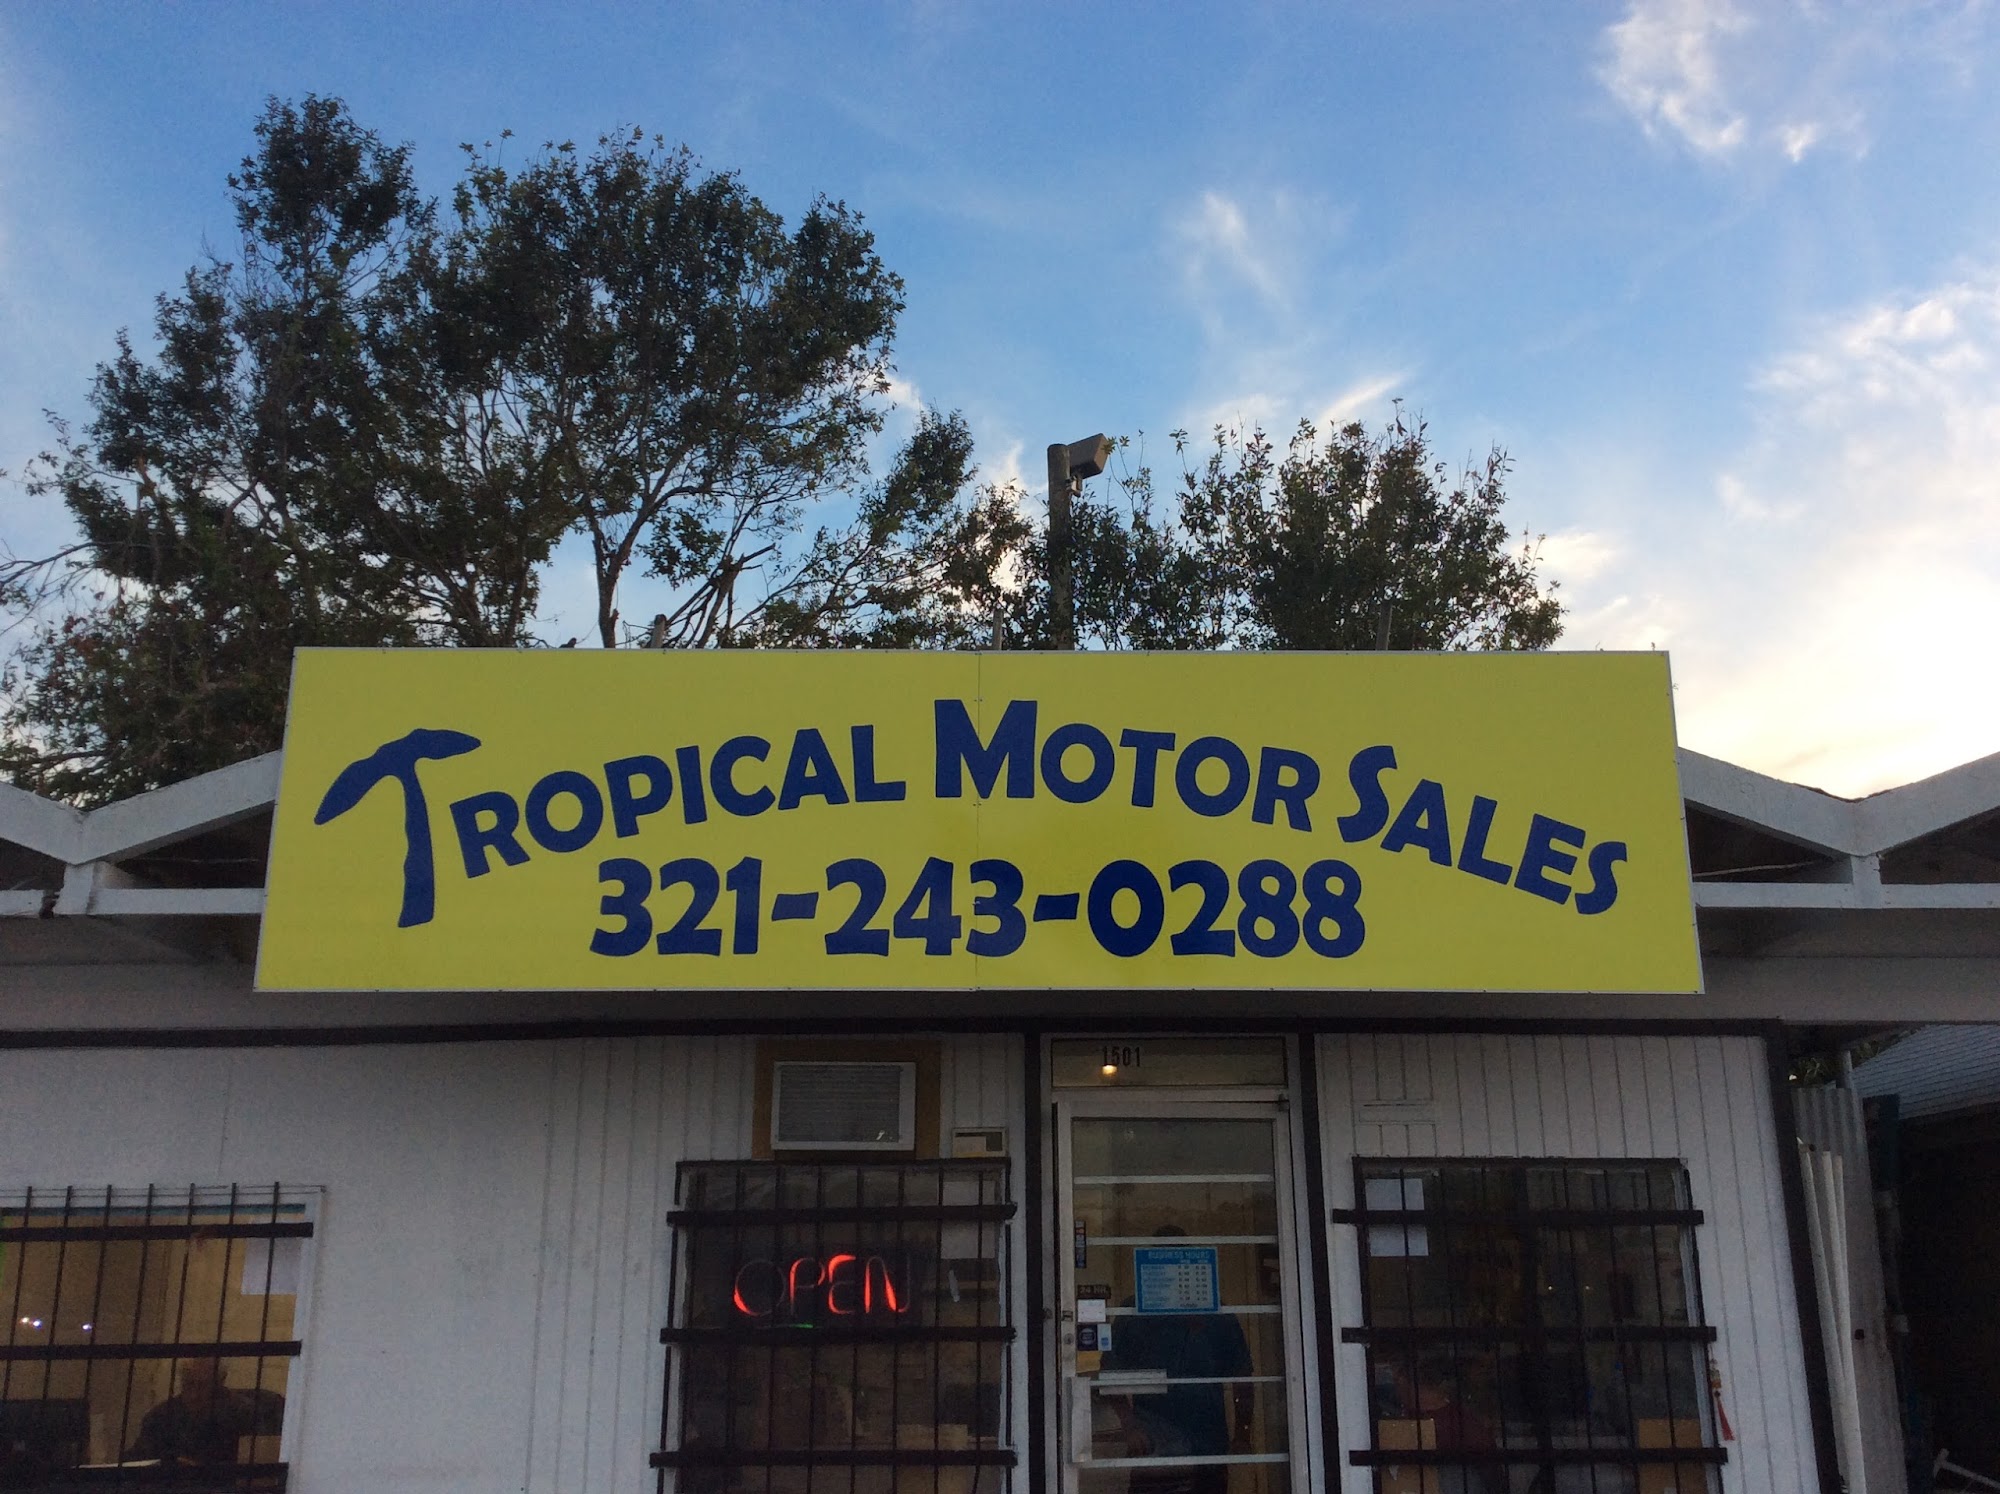 Tropical Motor Sales